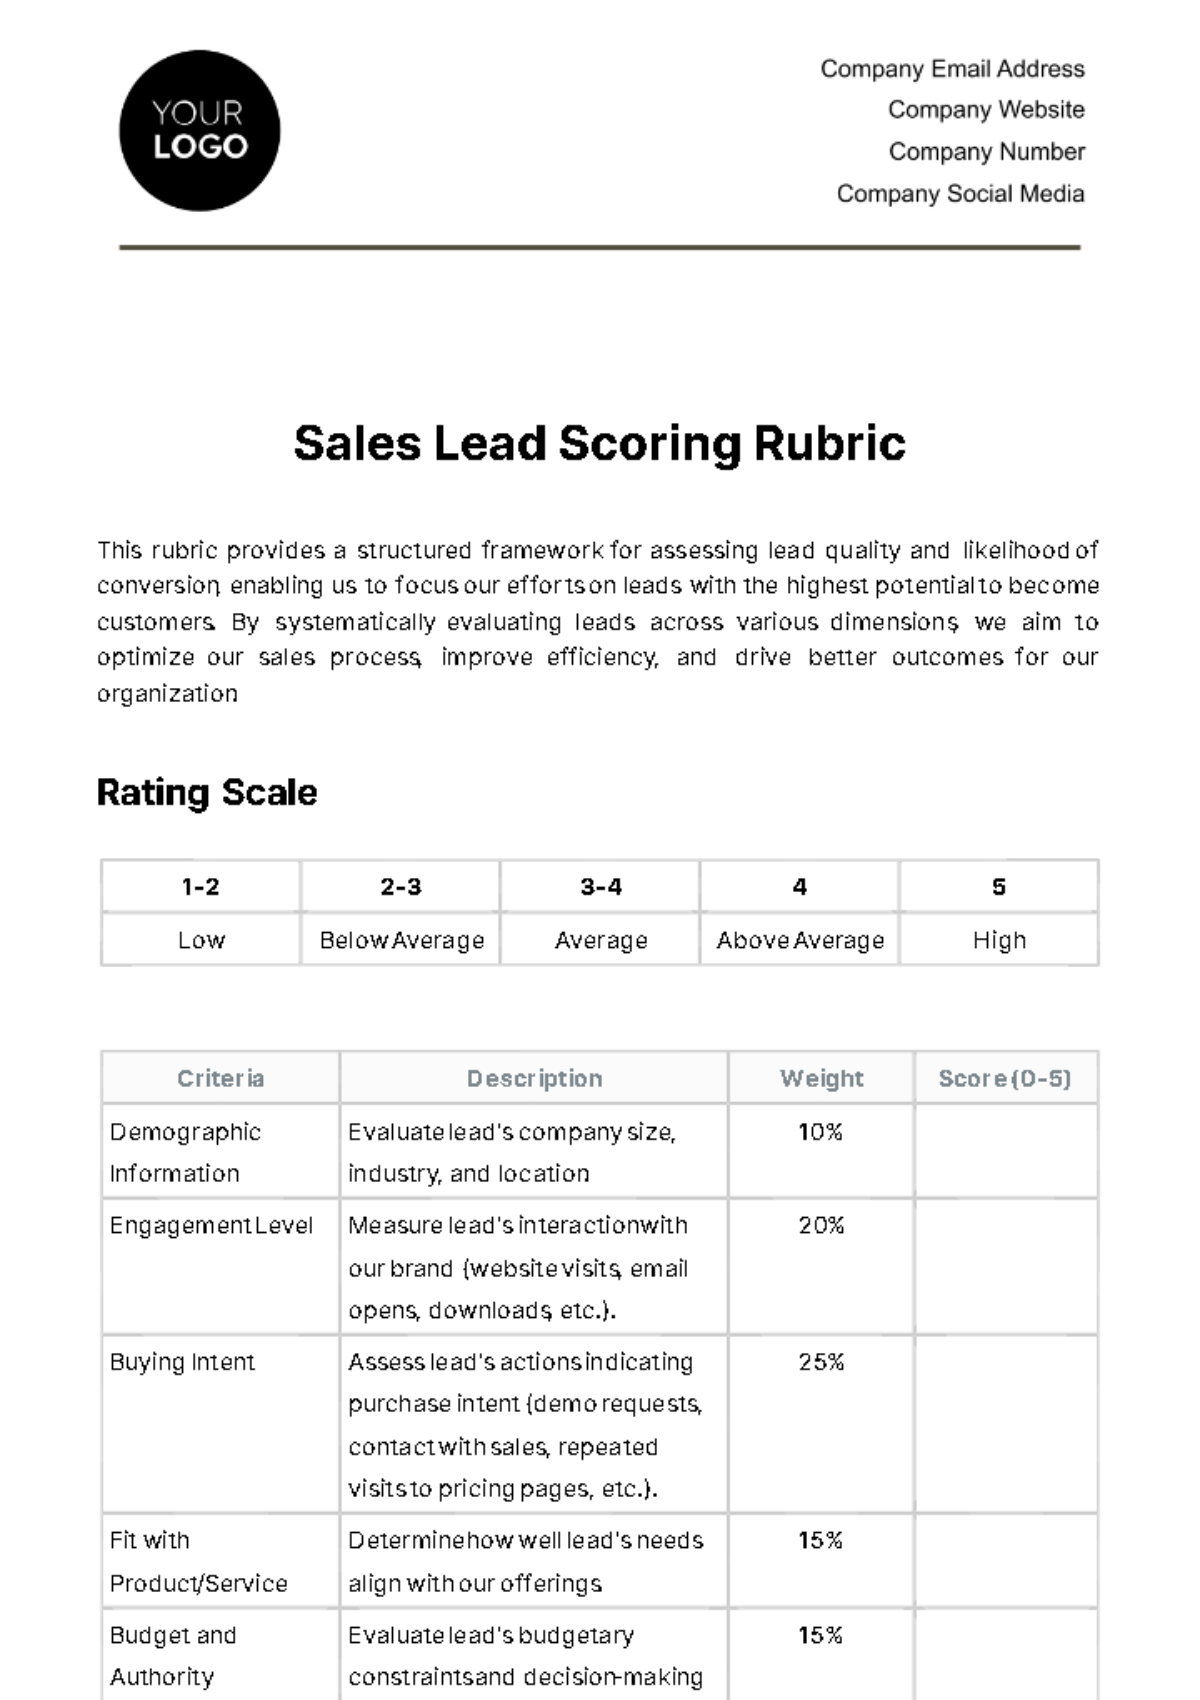 Sales Lead Scoring Rubric Template